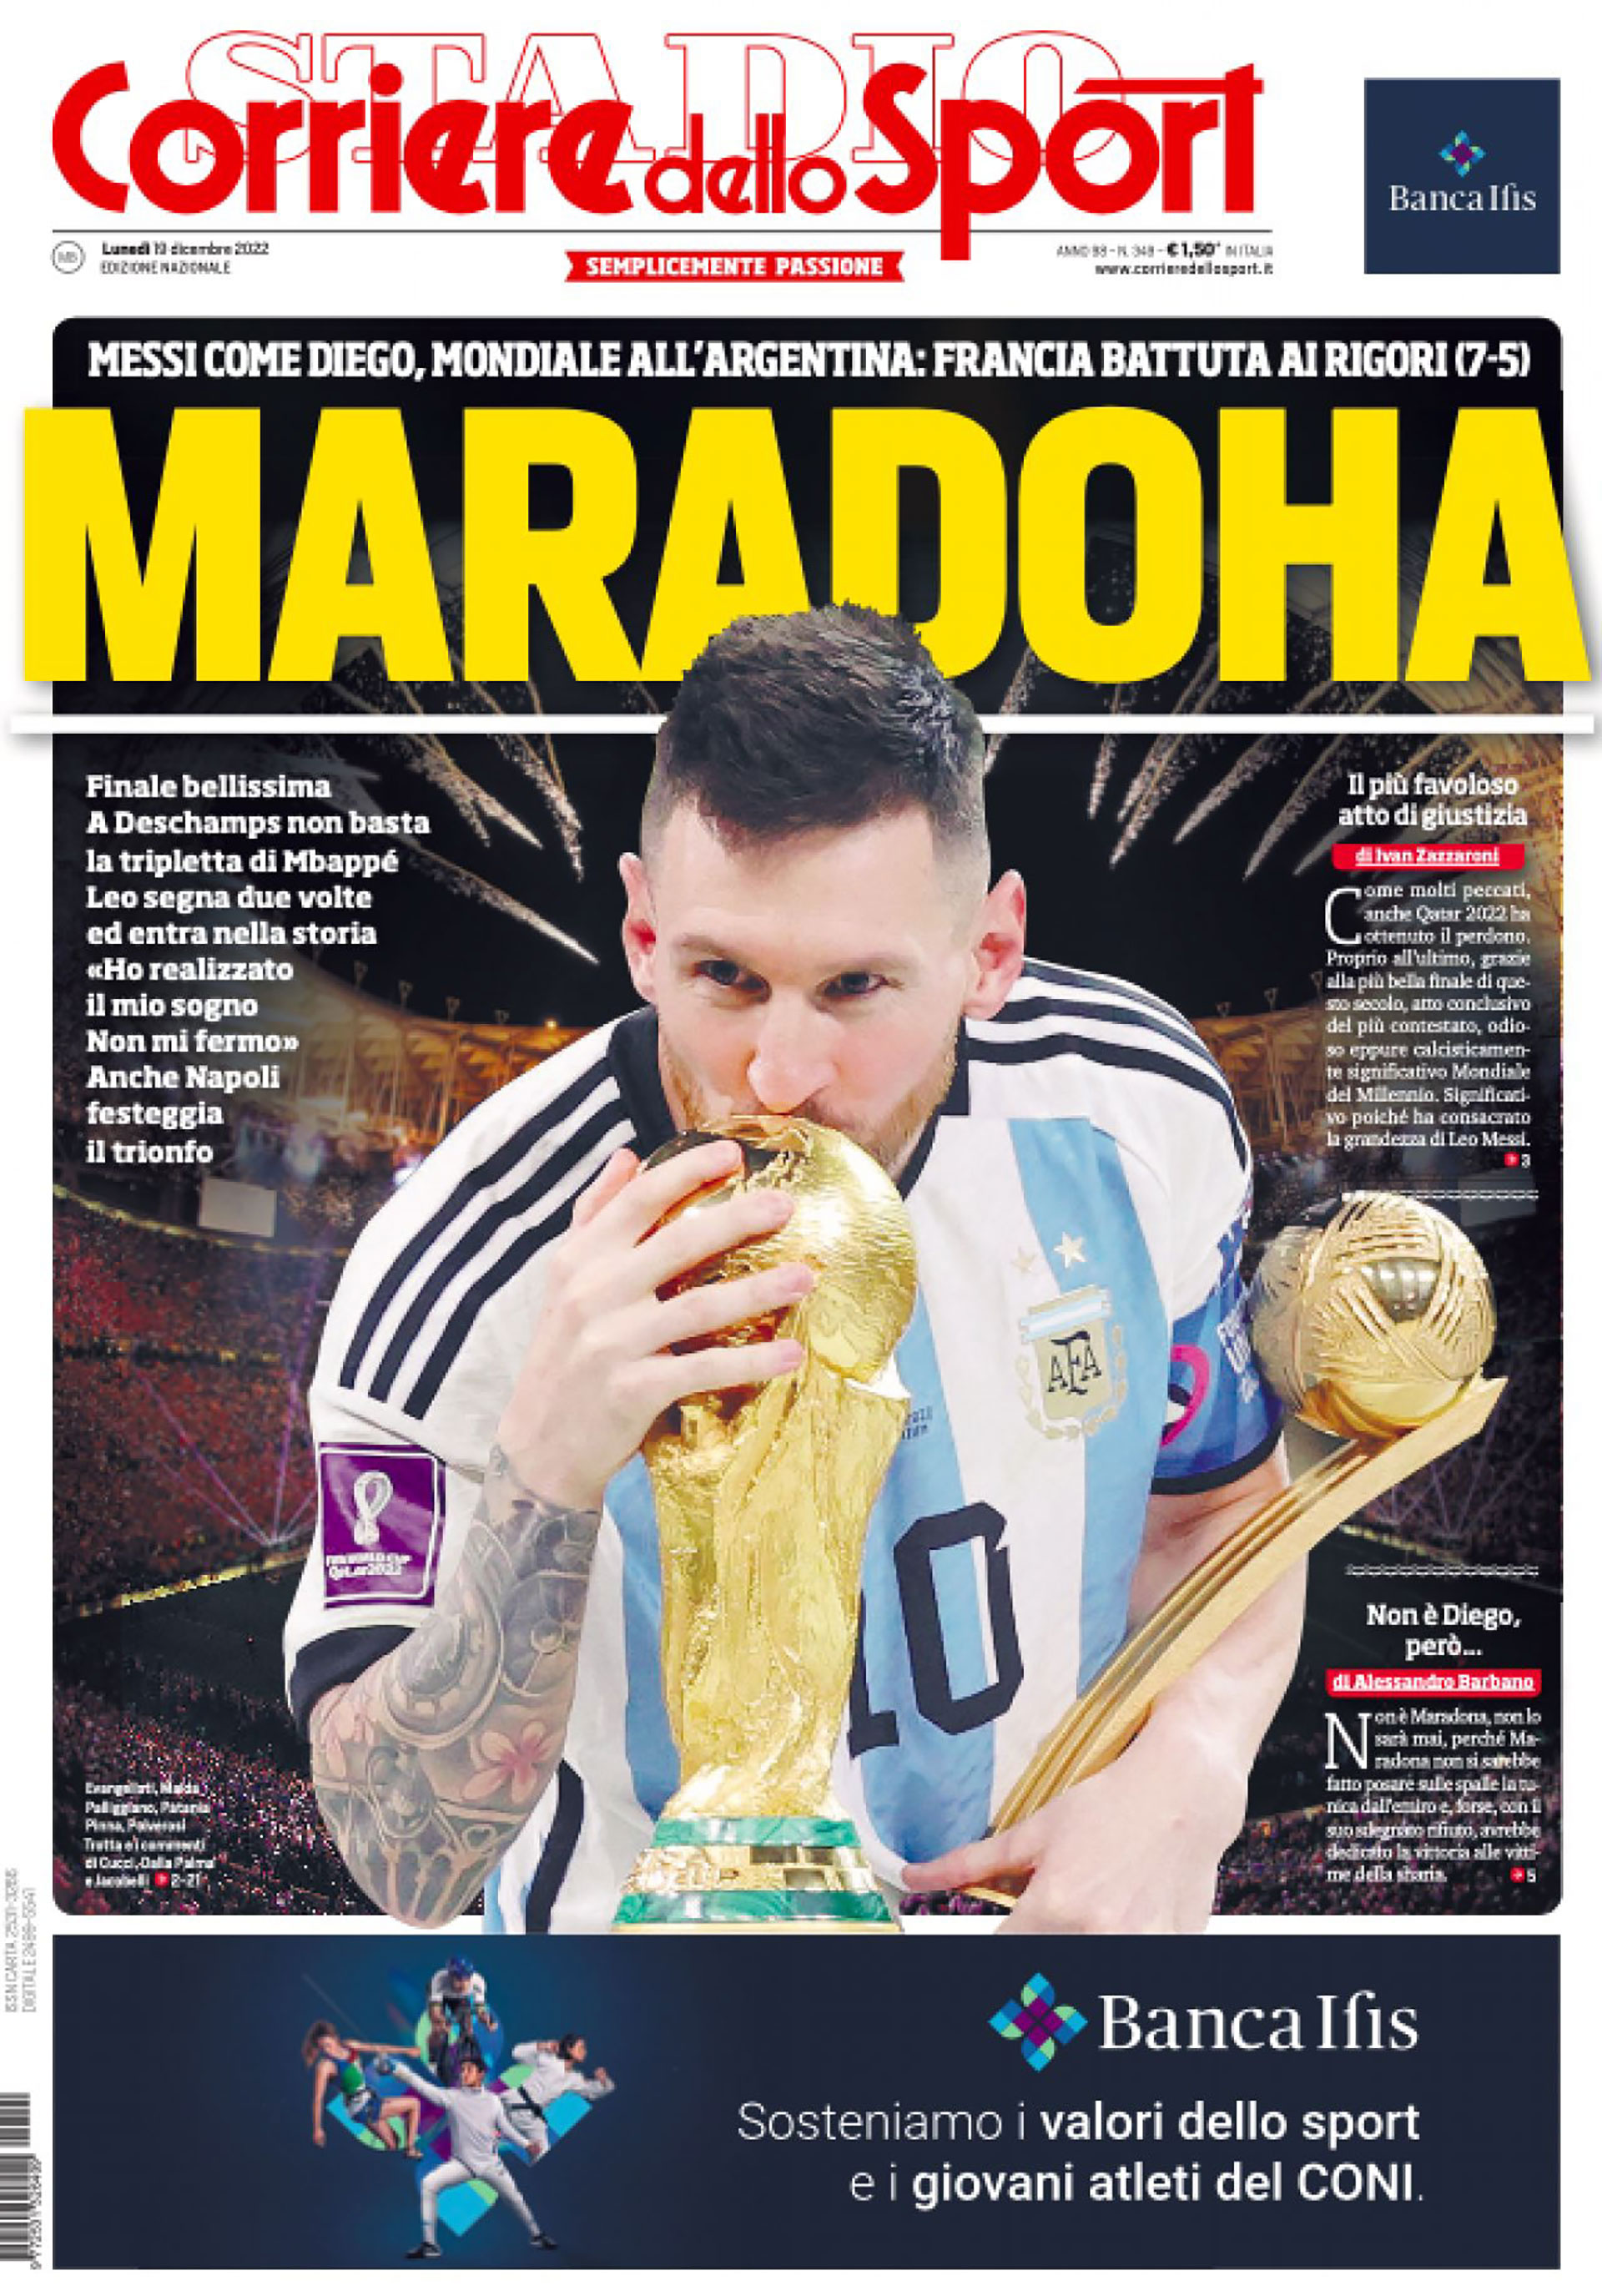 The Messi-Maradona link, axis of the cover of Corriere dello Sport